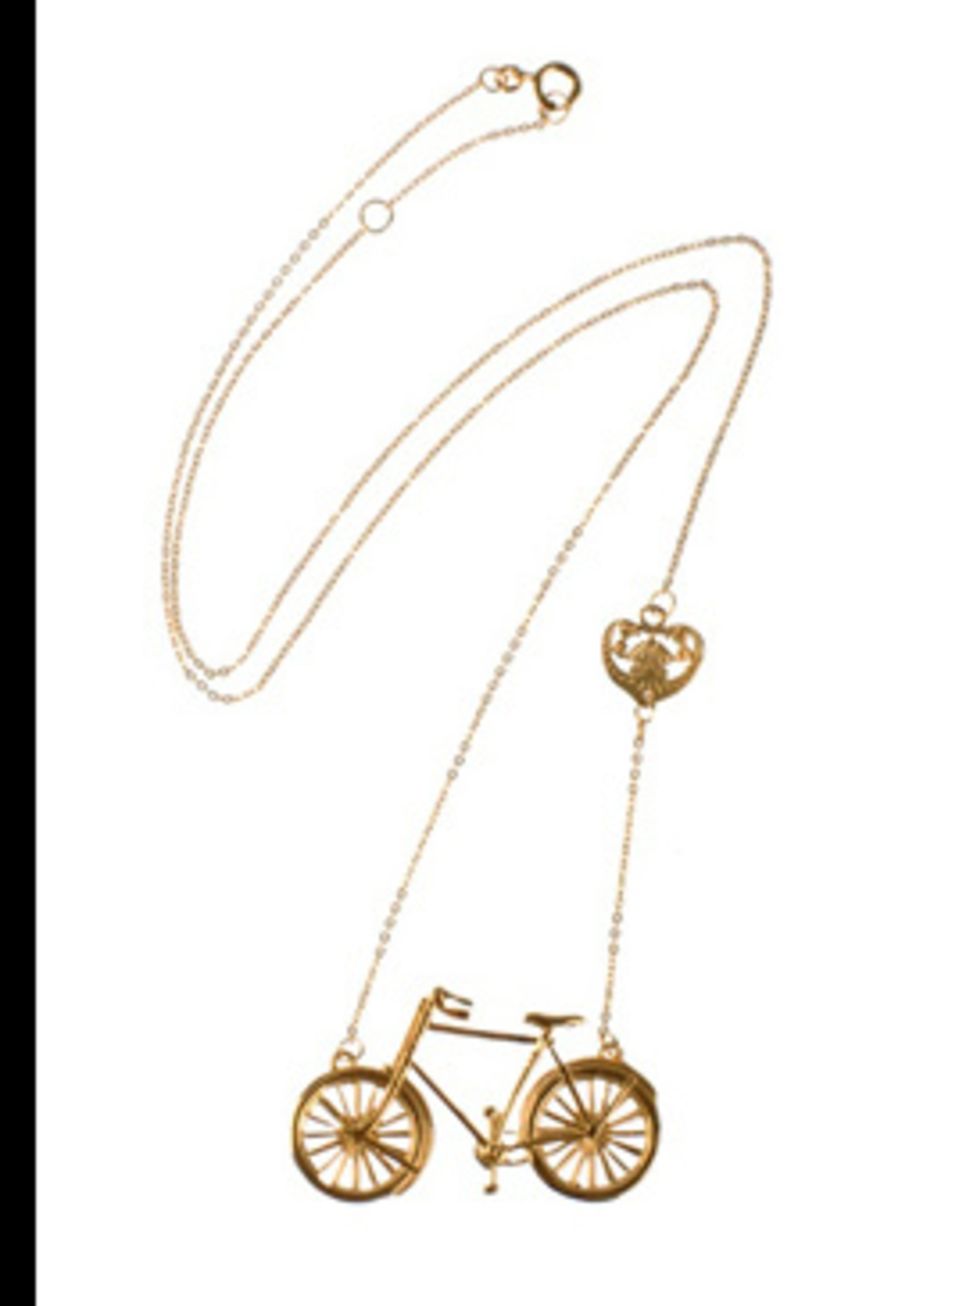 <p>Bike Pendant, £96.00 by <a href="http://www.farfetch.com/shopping/women/jewellery/item10008448.aspx?storeid=9010">Beyond The Valley</a></p>